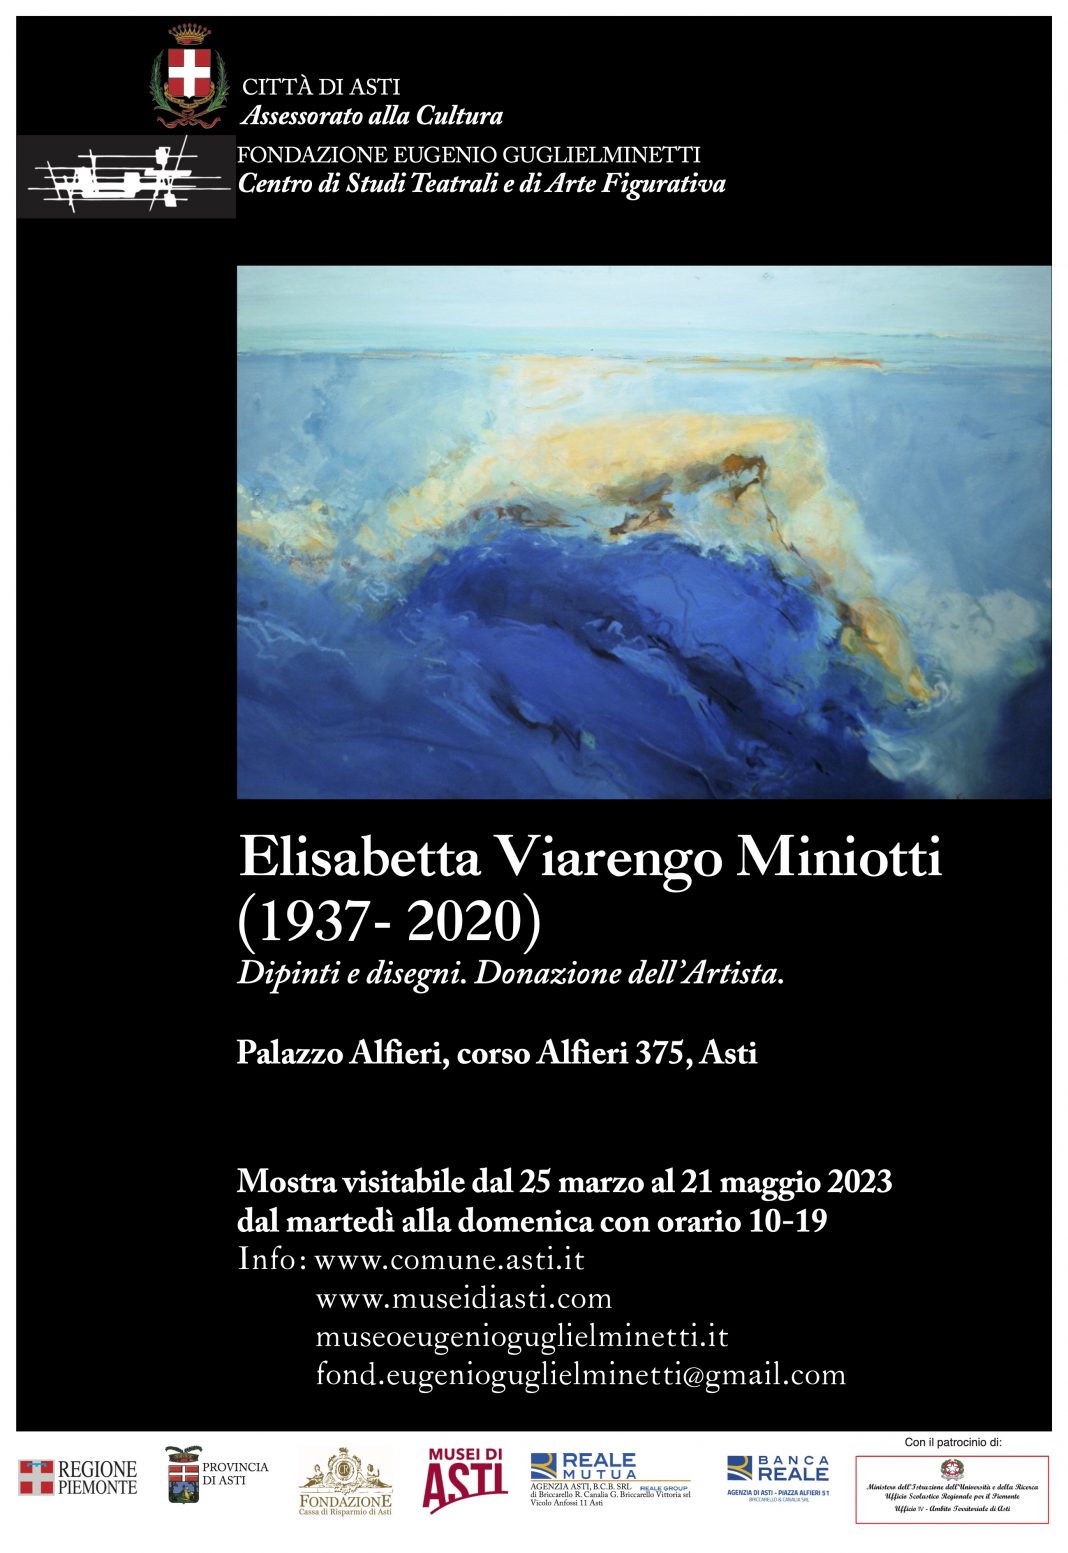 Elisabetta Viarengo Miniotti – Dipinti e disegnihttps://www.exibart.com/repository/media/formidable/11/img/fe3/LocViarengoMiniotti_Guglielminetti-1068x1553.jpg